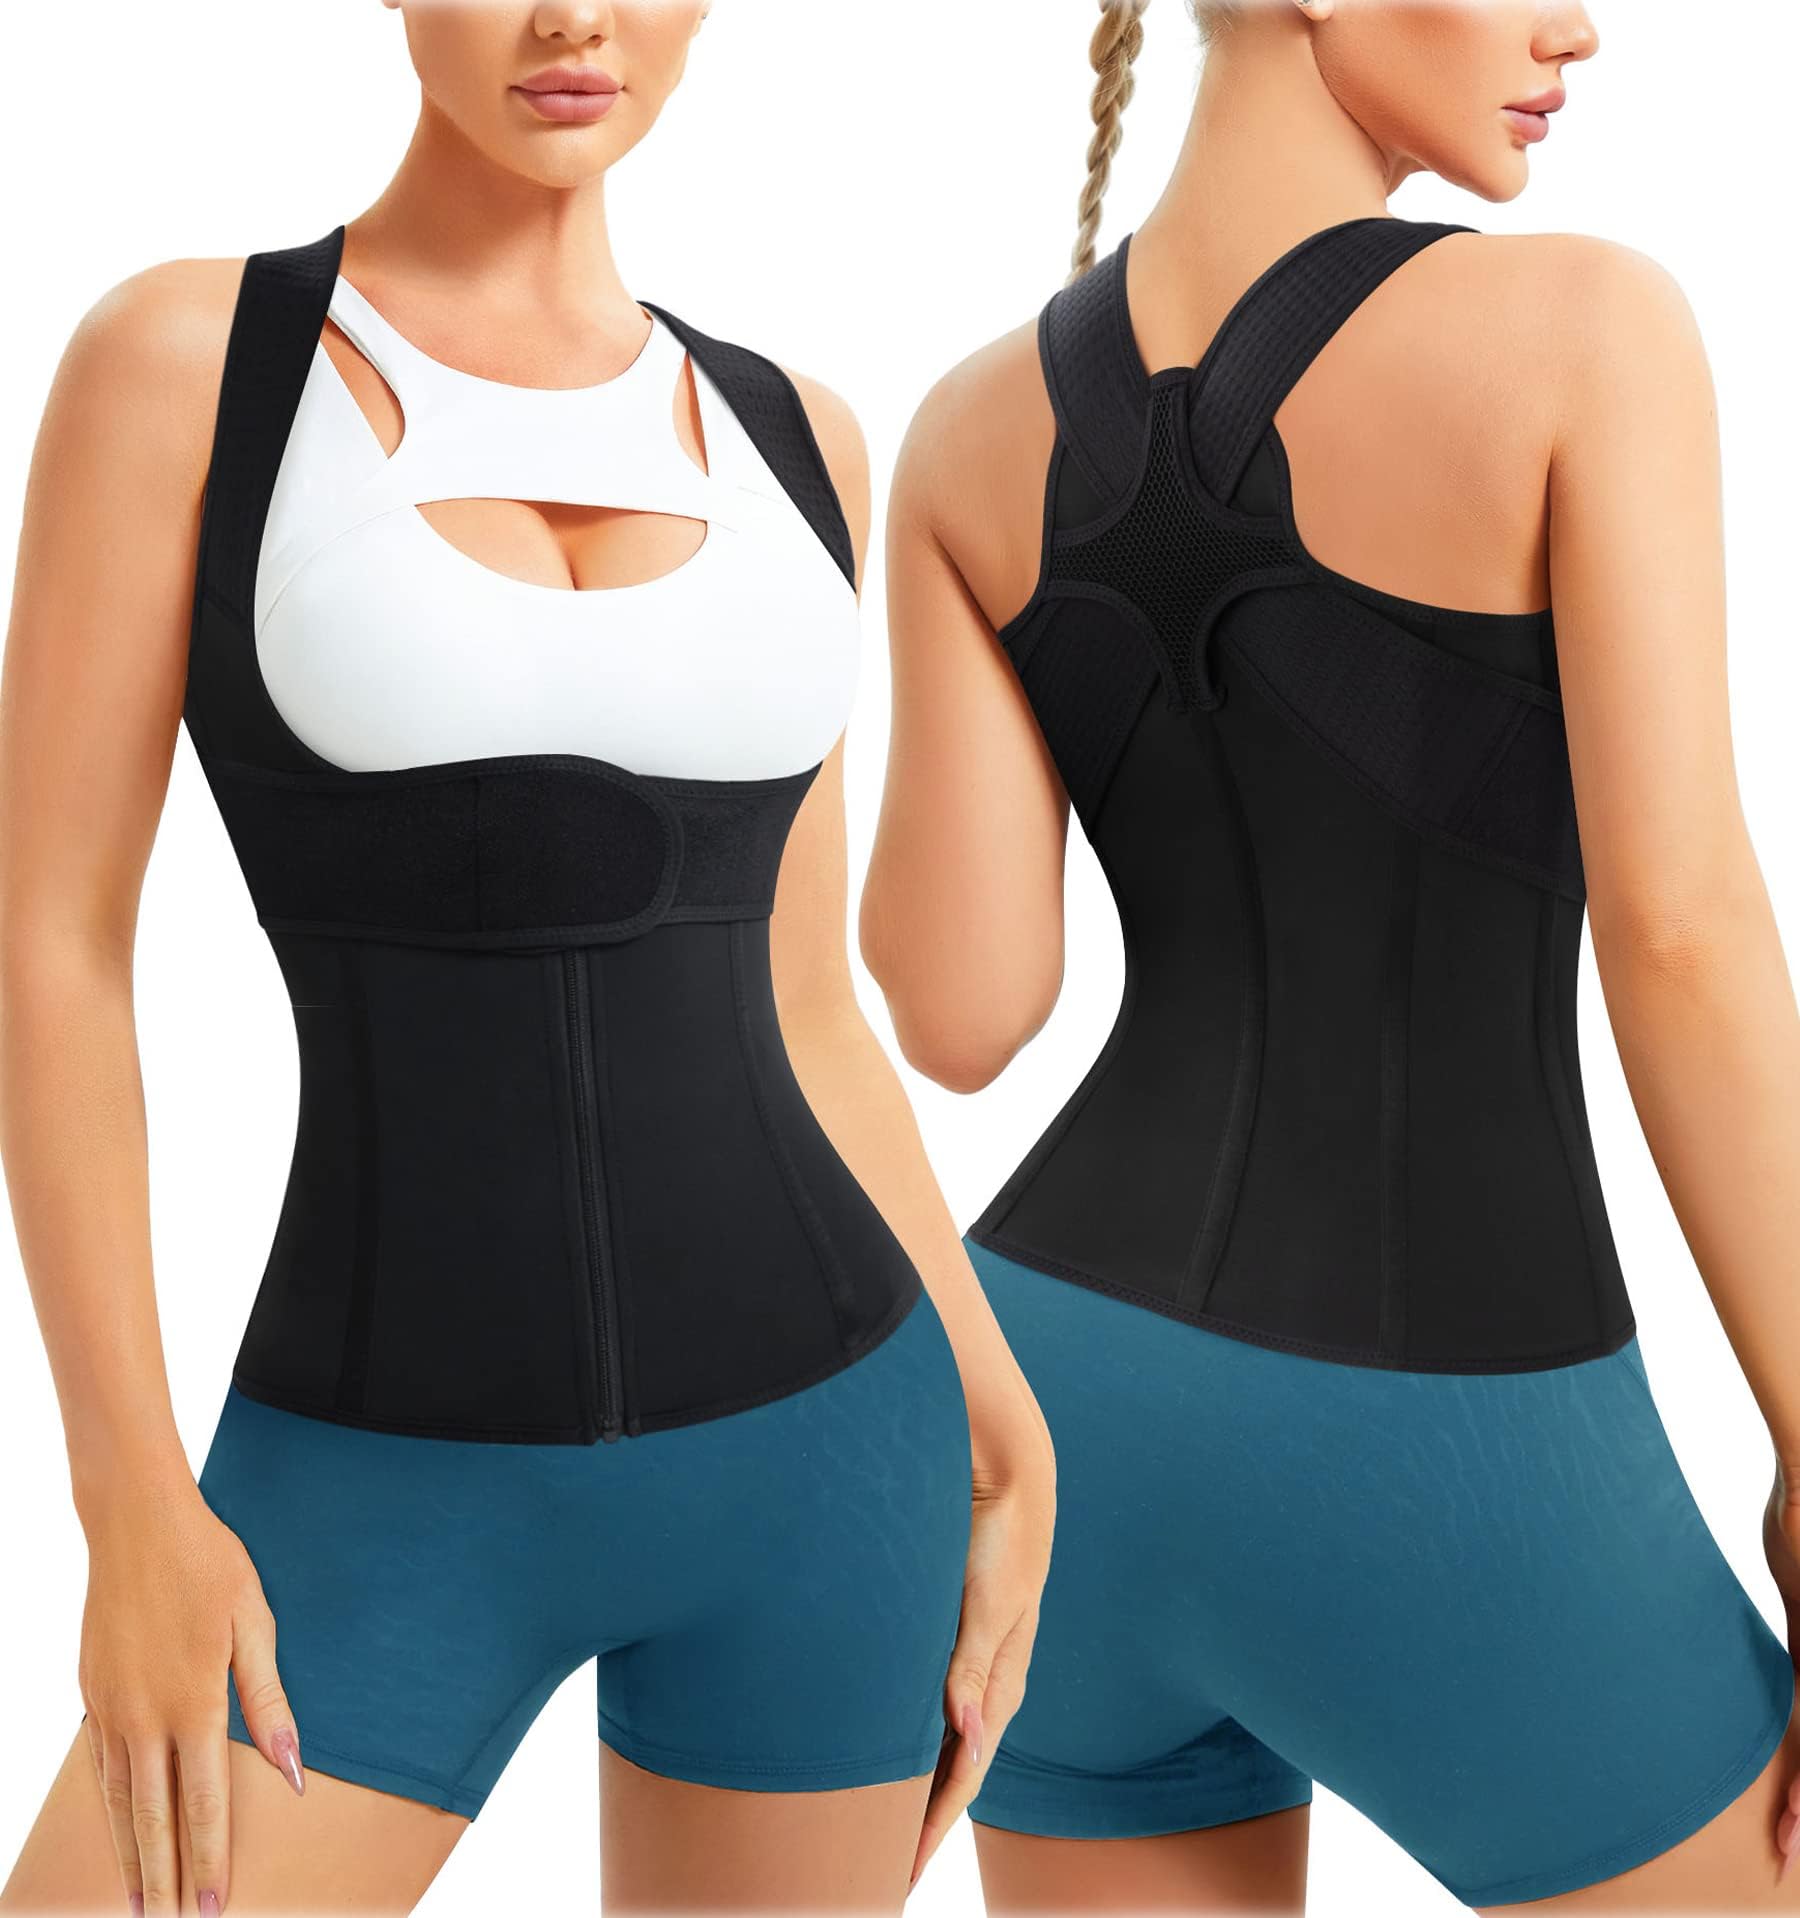 Women Chest Brace Support Vest Back Adjustable Breathable Corrector  Underwear S-XXL Sports Bra